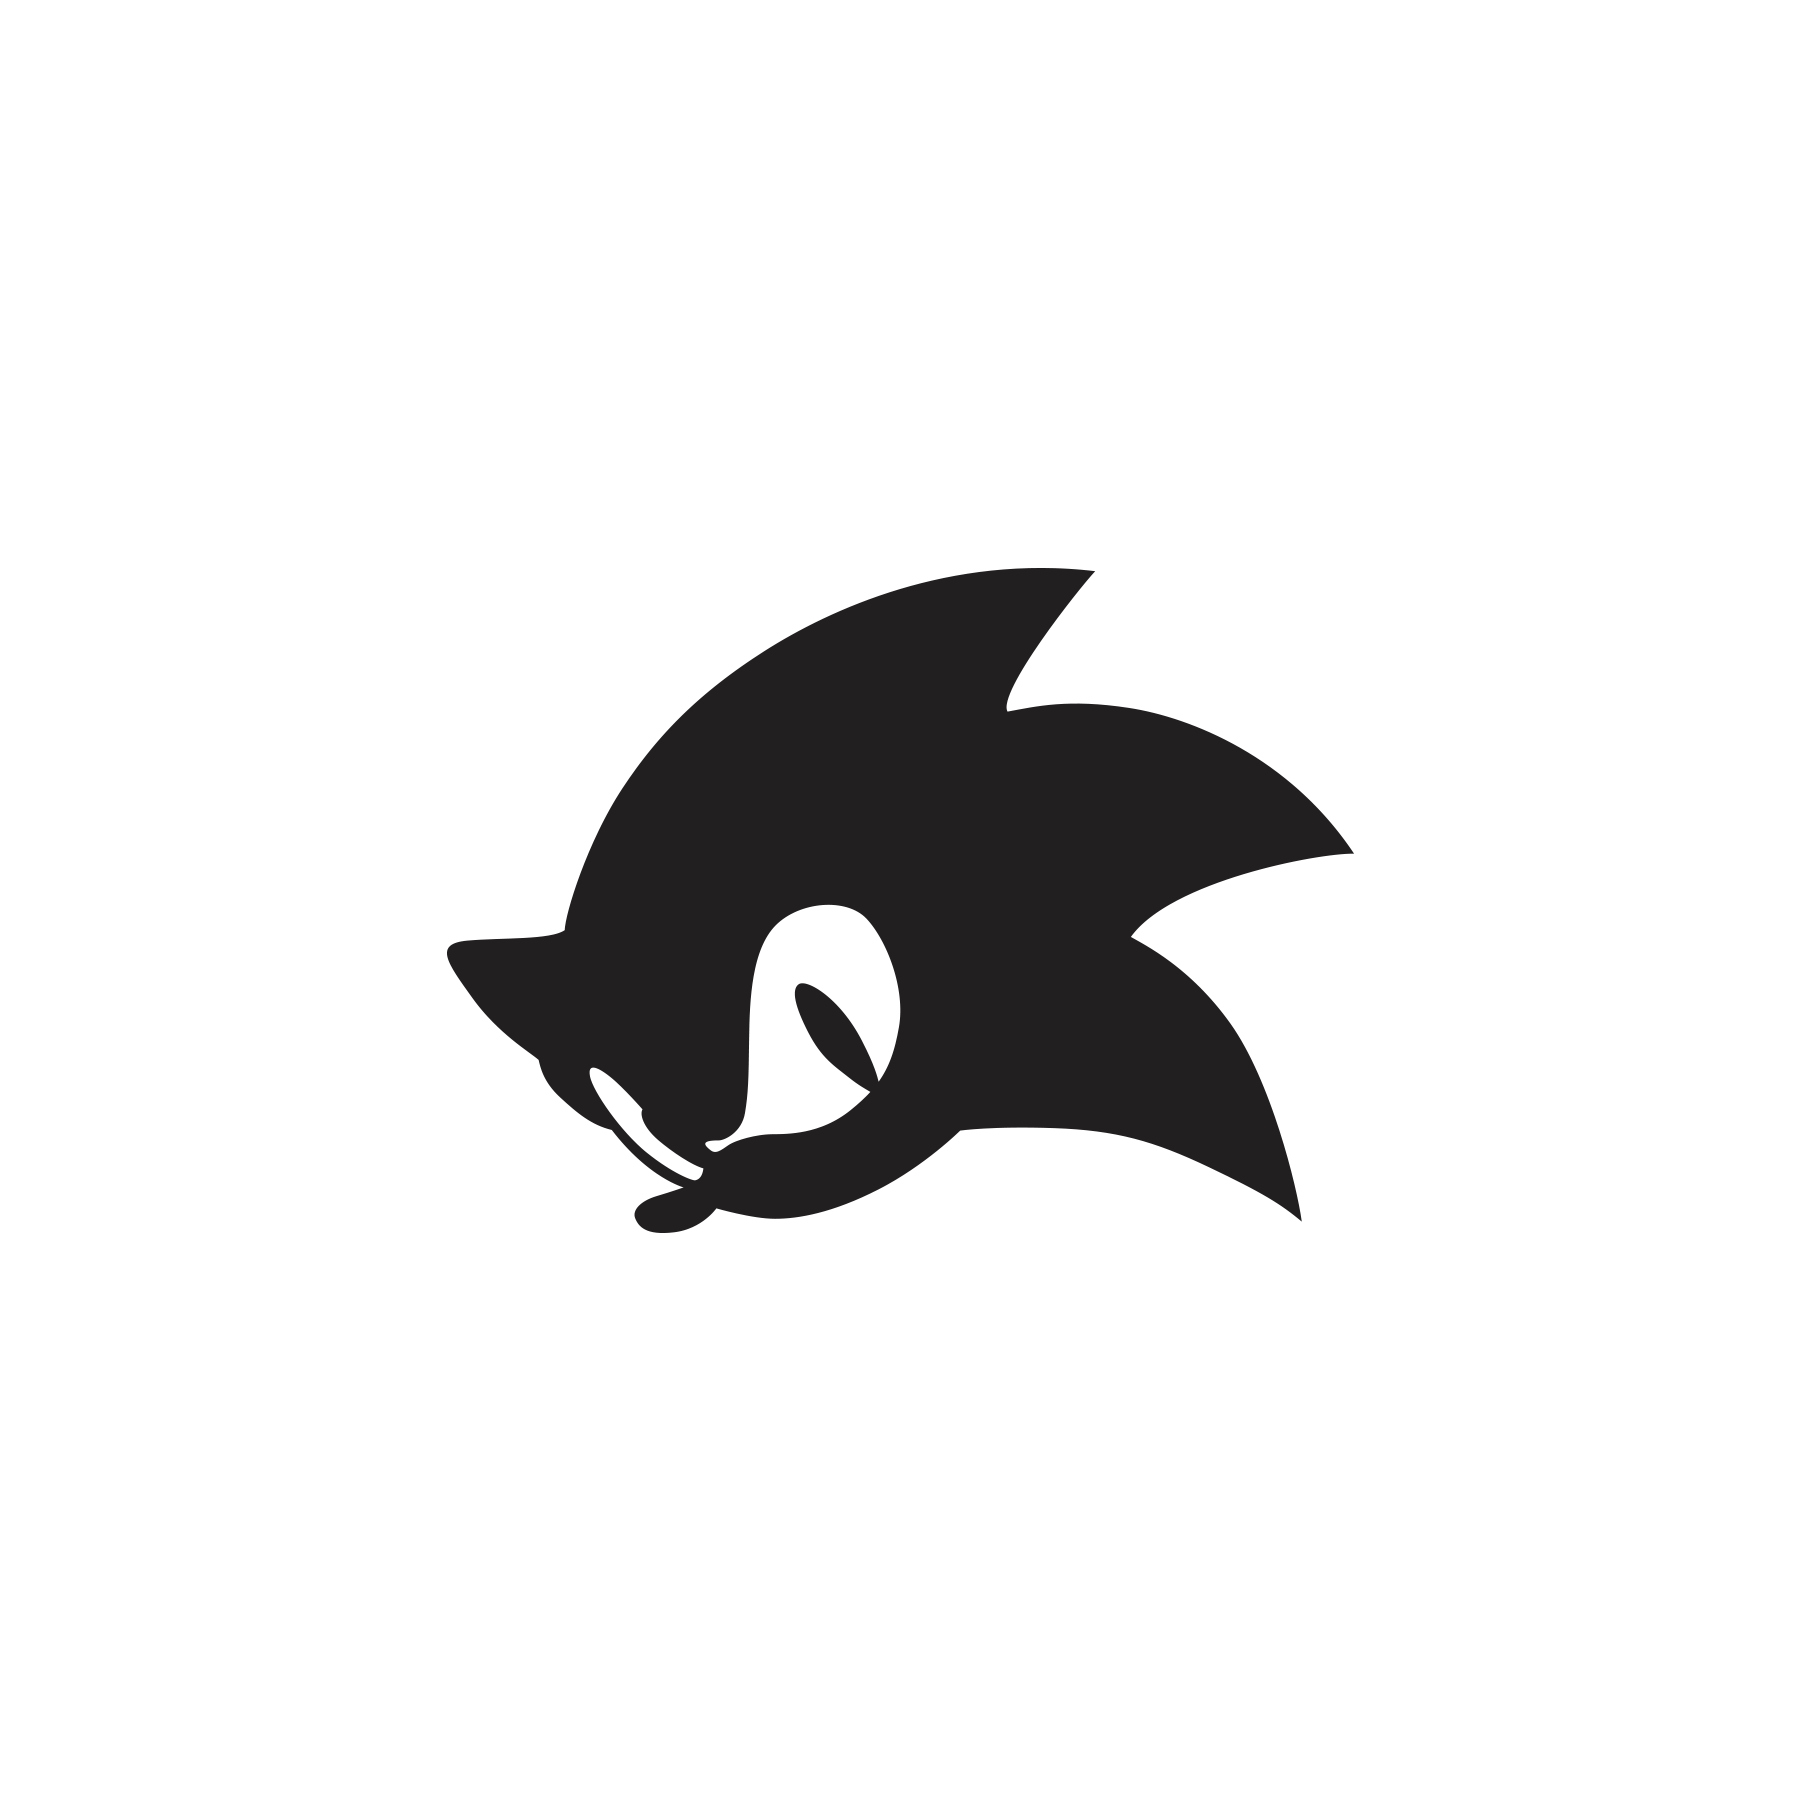 Shadow the hedgehog | Sticker